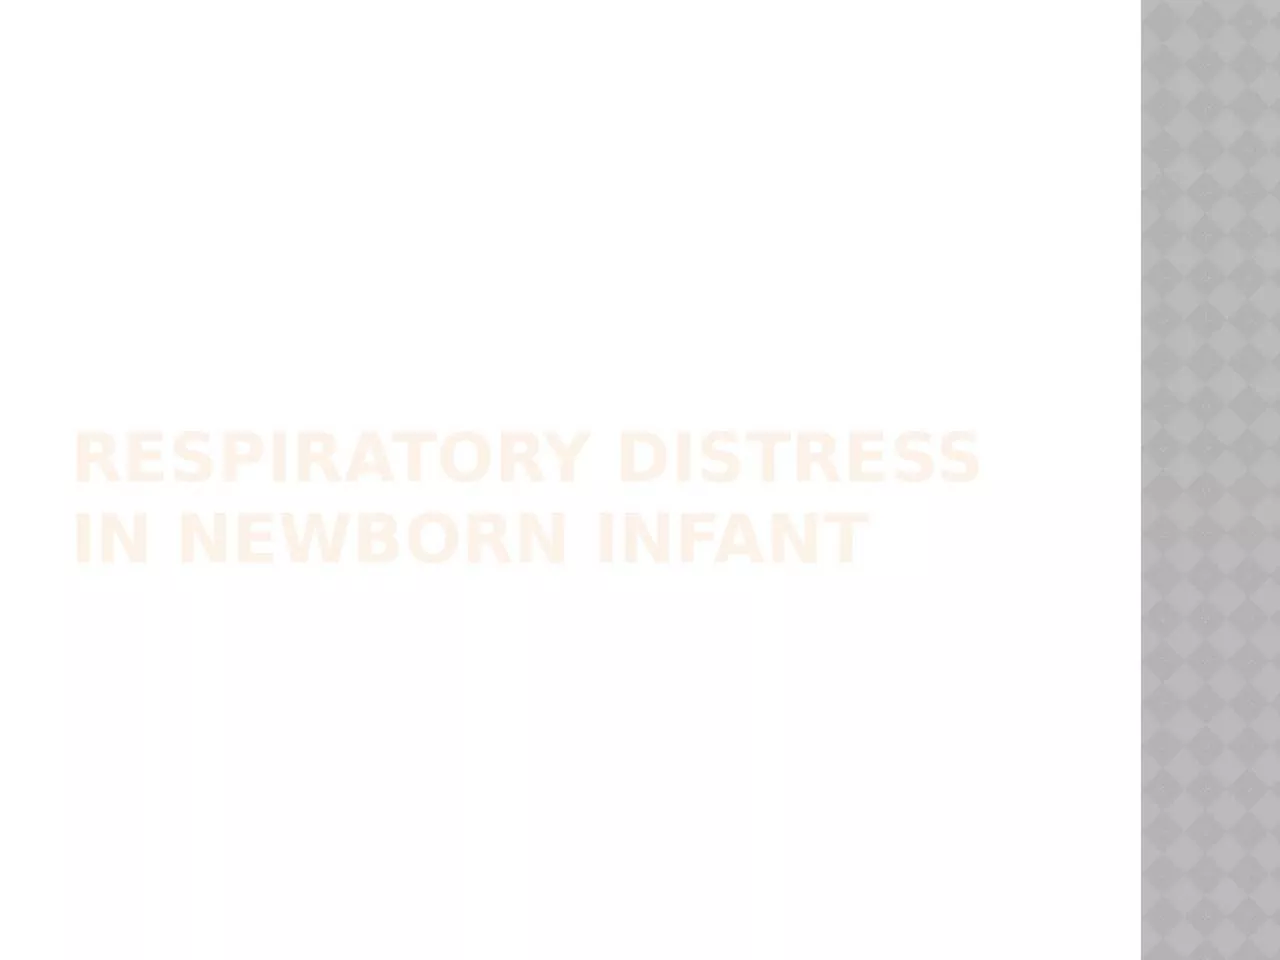 RESPIRATORY DISTRESS IN NEWBORN INFANT